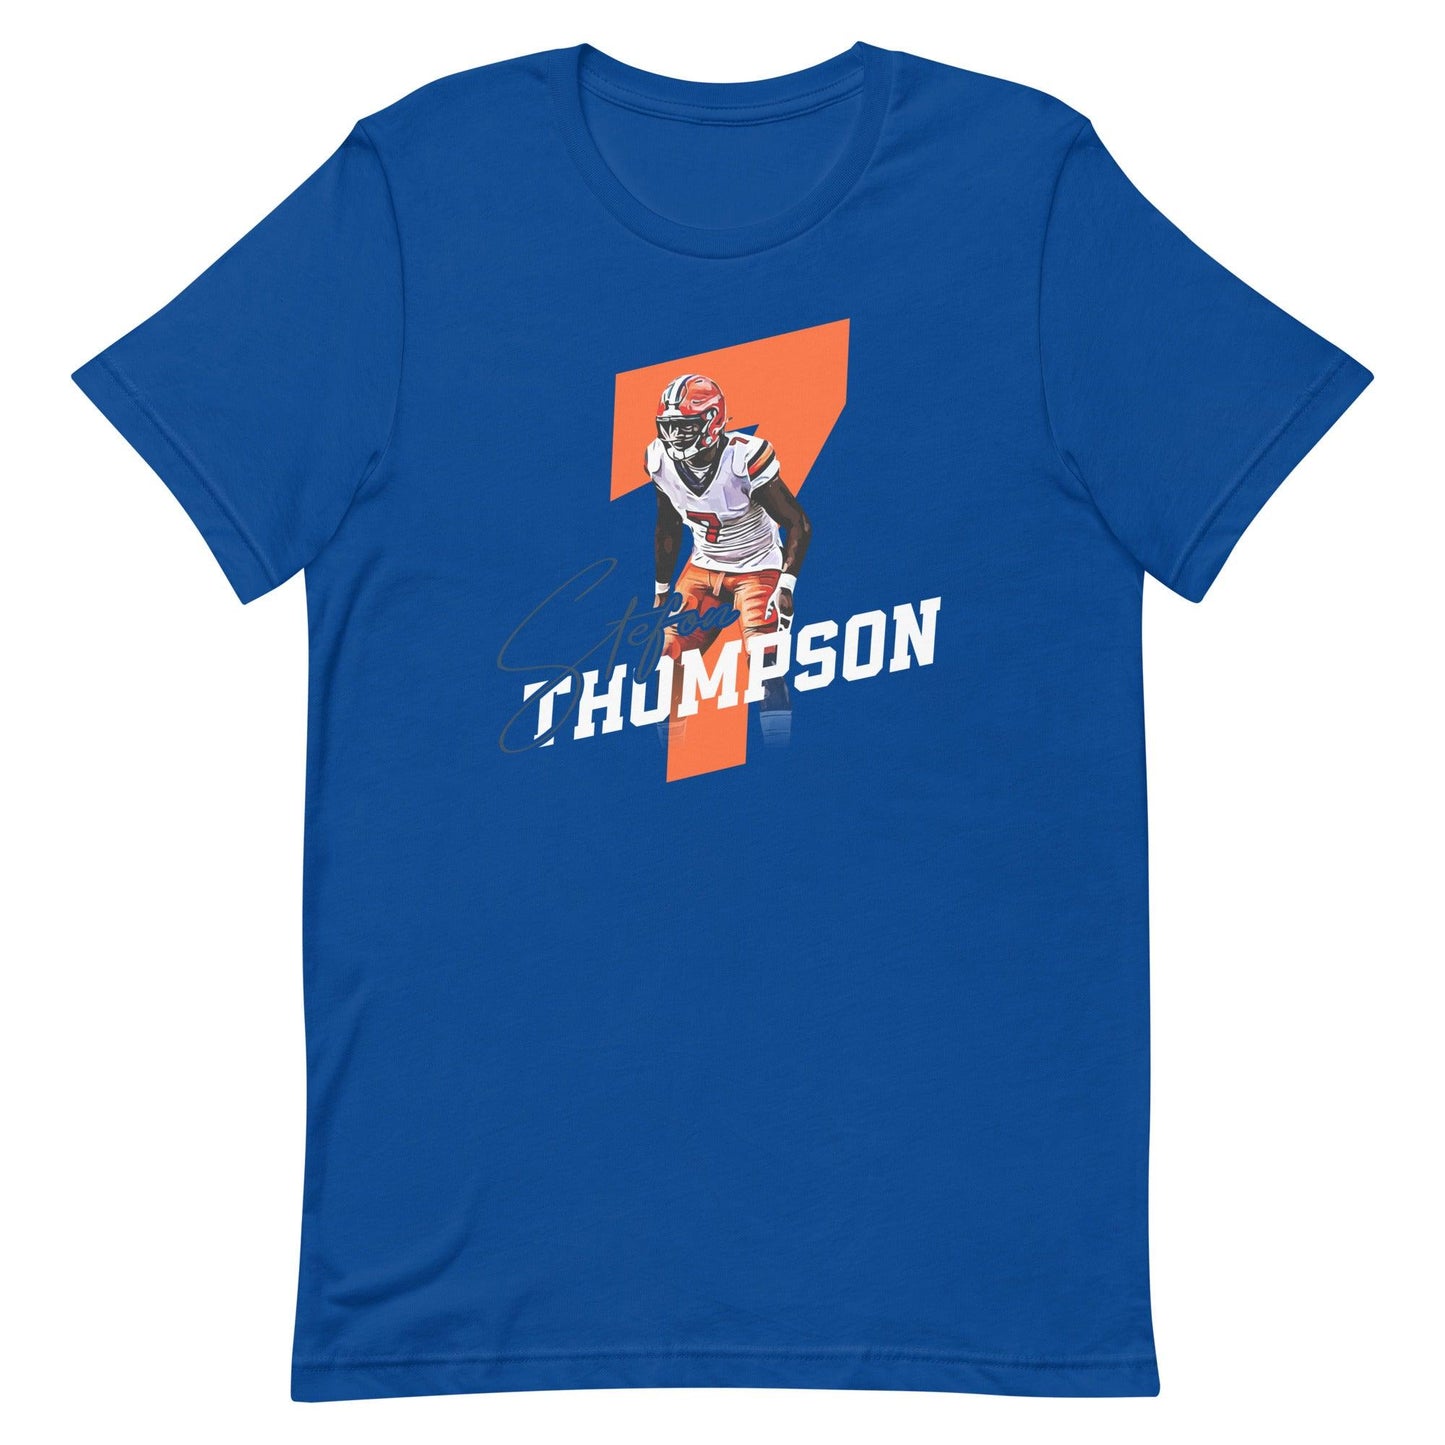 Stefon Thompson "7" t-shirt - Fan Arch